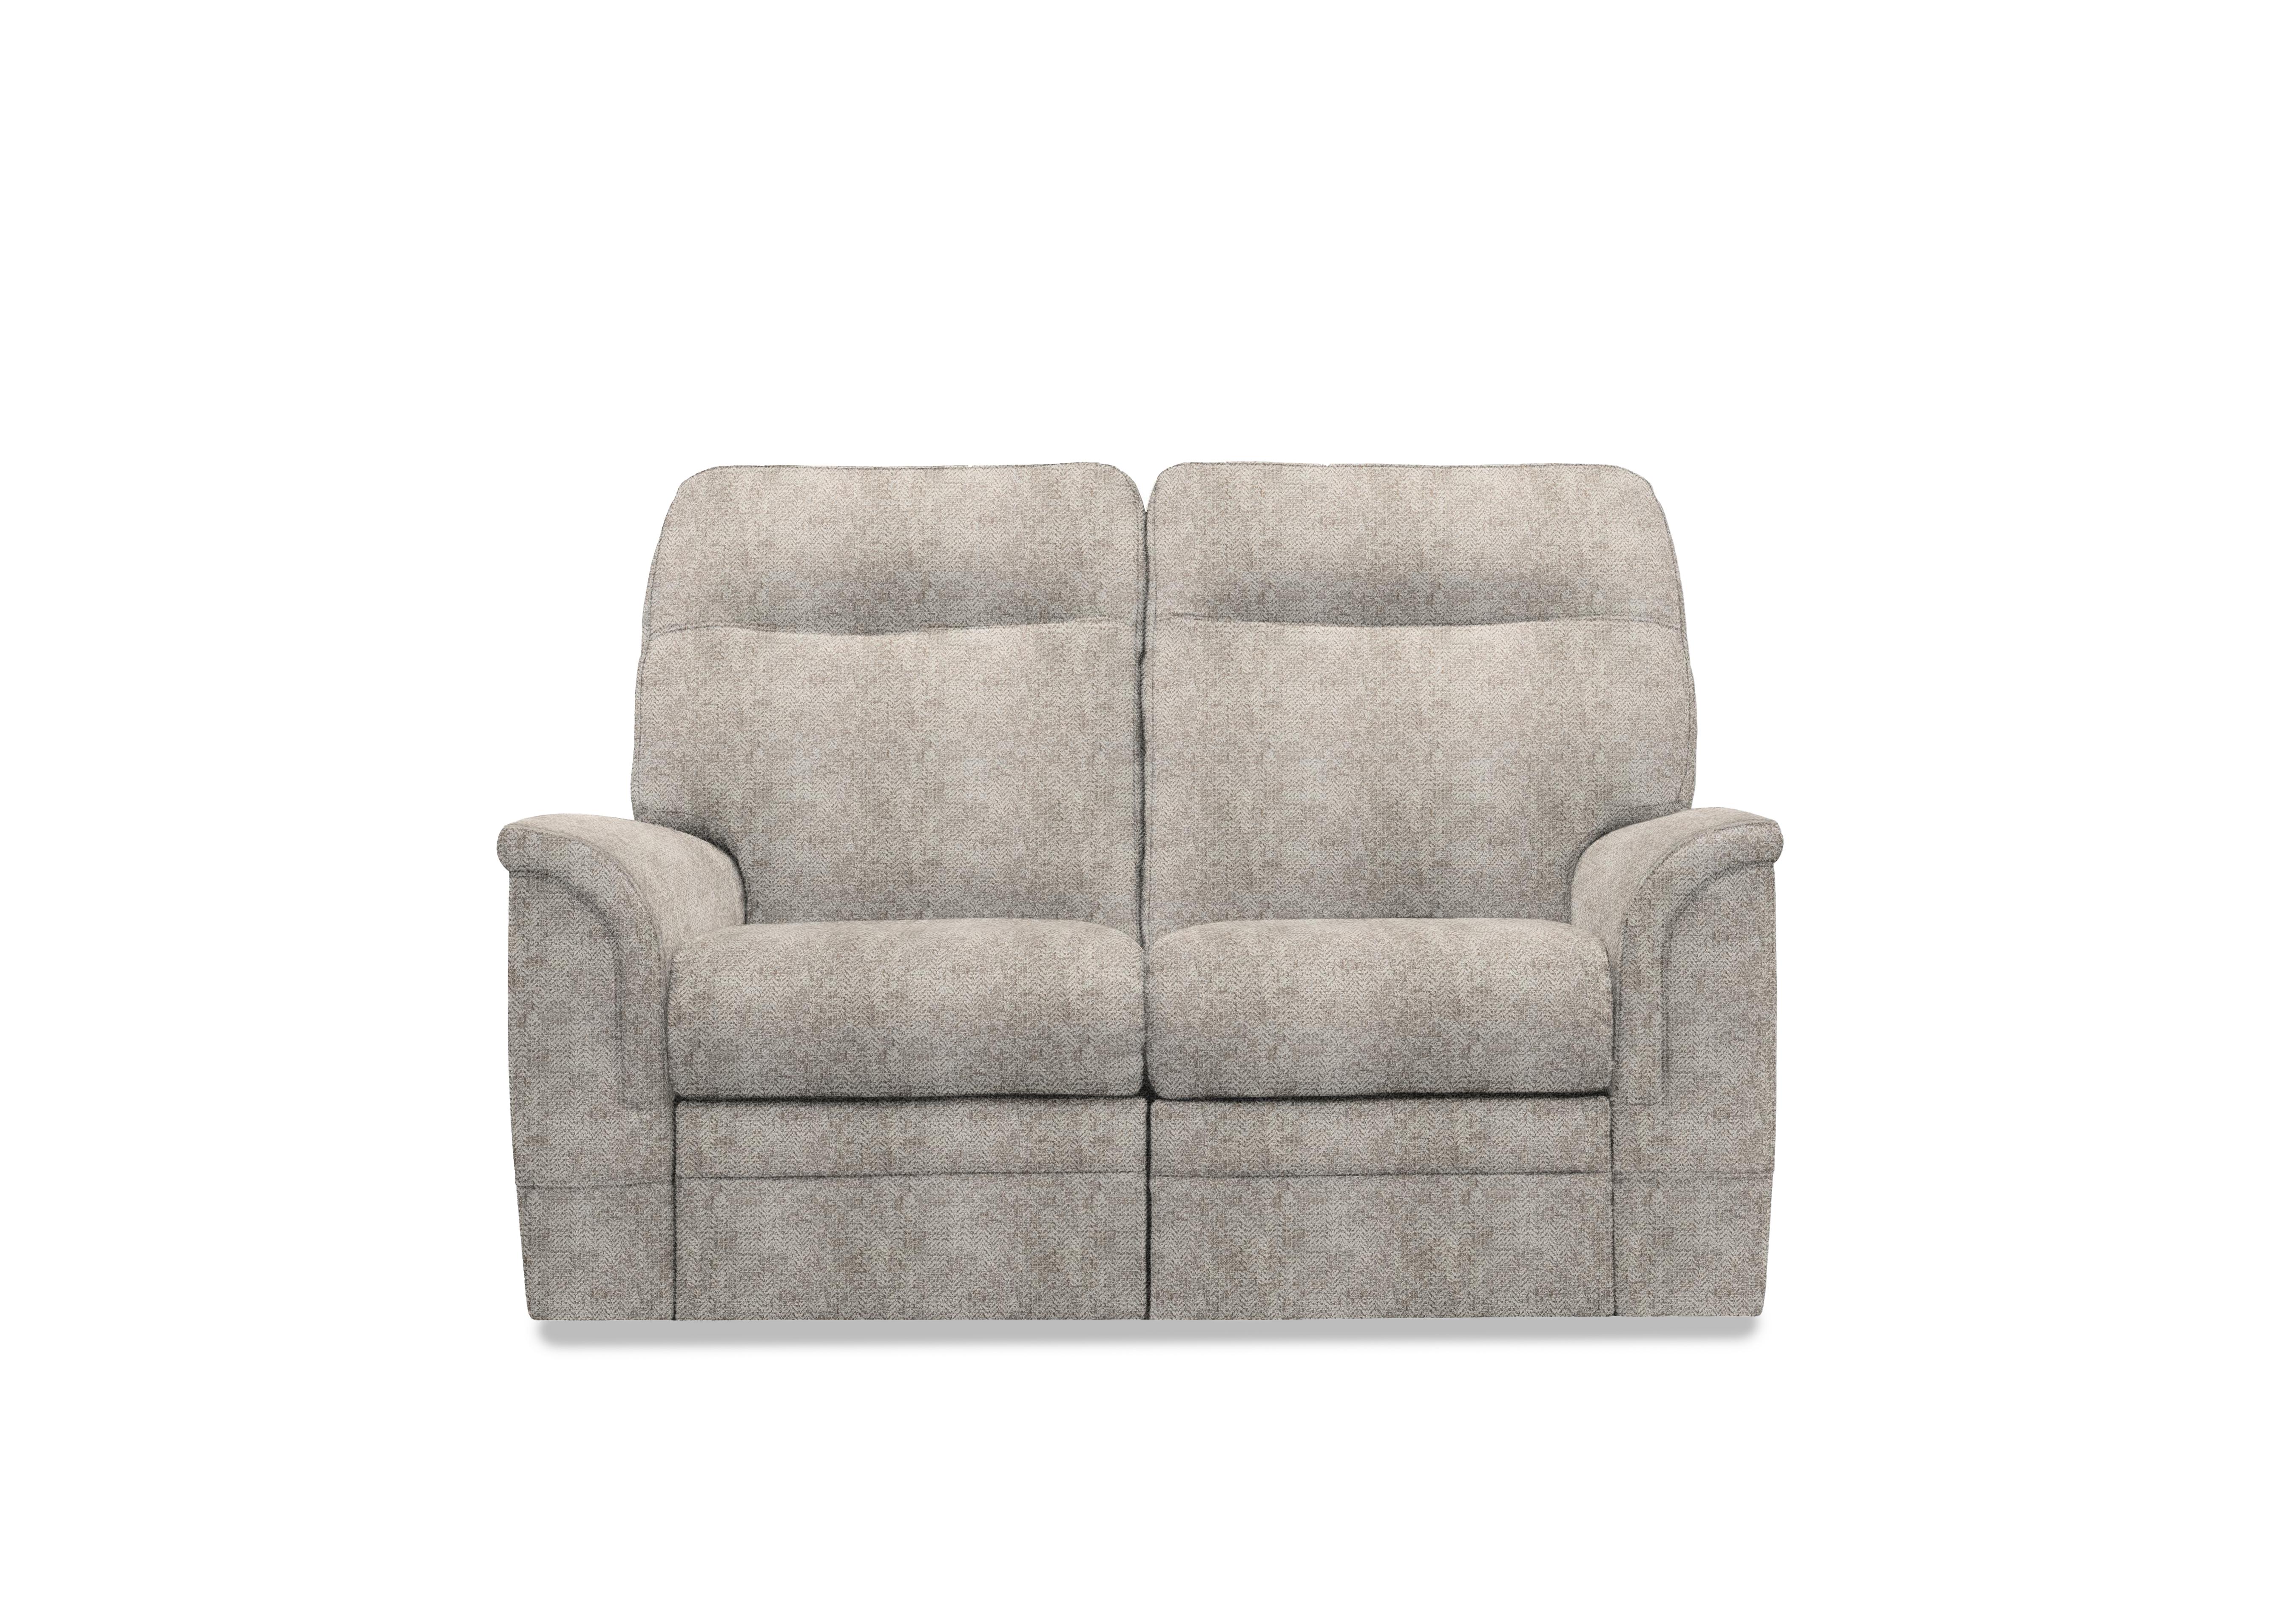 Hudson 23 Fabric 2 Seater Sofa in Ida Stone 006035-0055 on Furniture Village